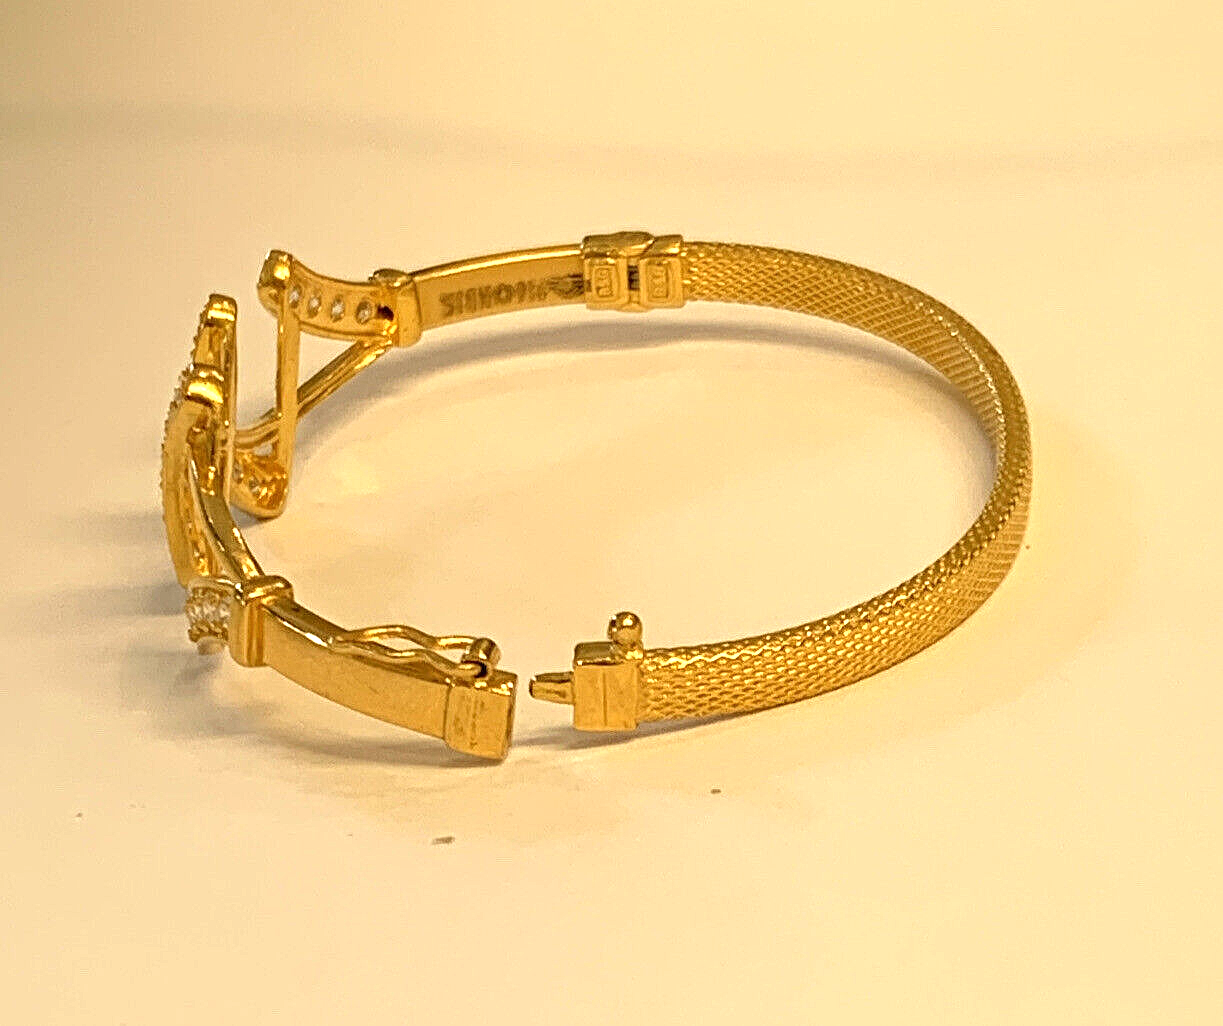 22k 916 Gold Ladies CZ Bangle Bracelet - 15.2 Grams